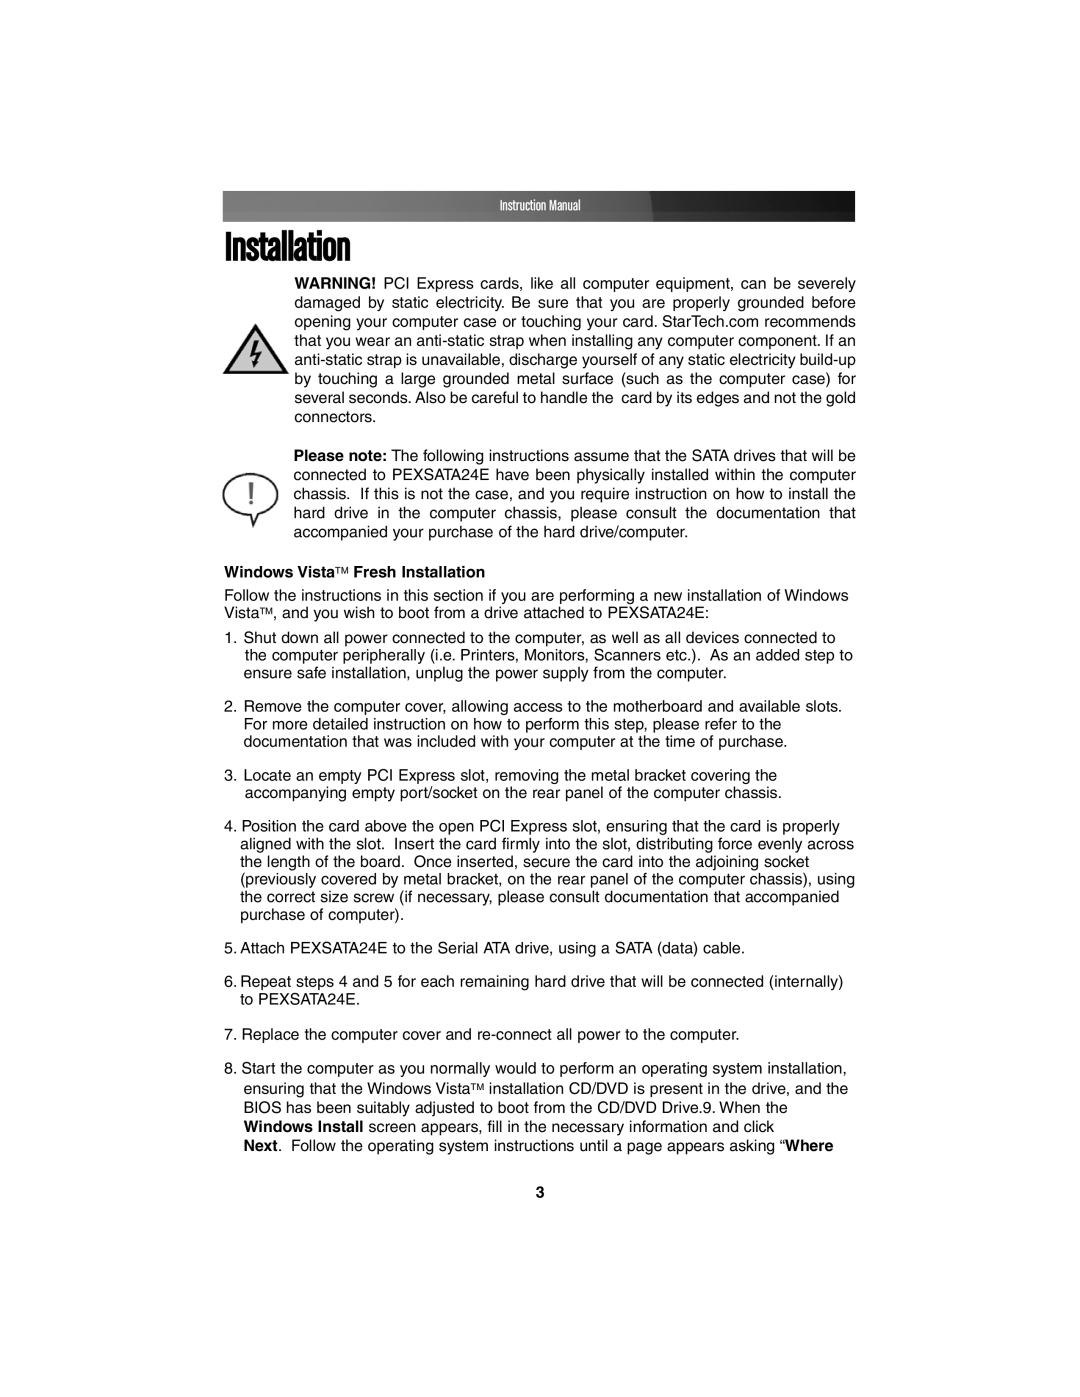 StarTech.com PEXSATA24E instruction manual Windows VistaTM Fresh Installation, Instruction Manual 